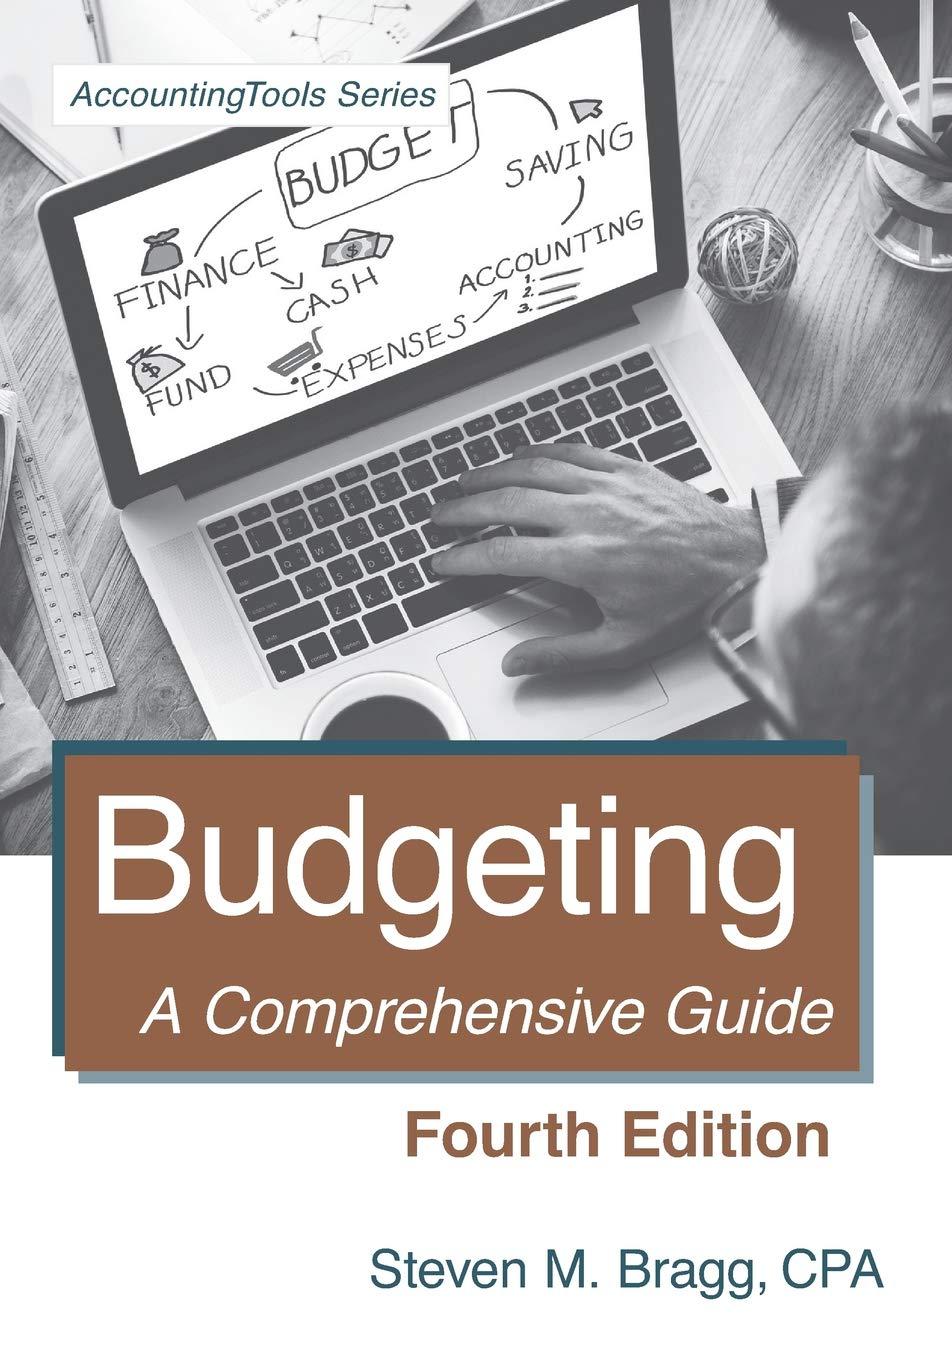 budgeting a comprehensive guide 4th edition steven m. bragg 1938910893, 978-1938910890